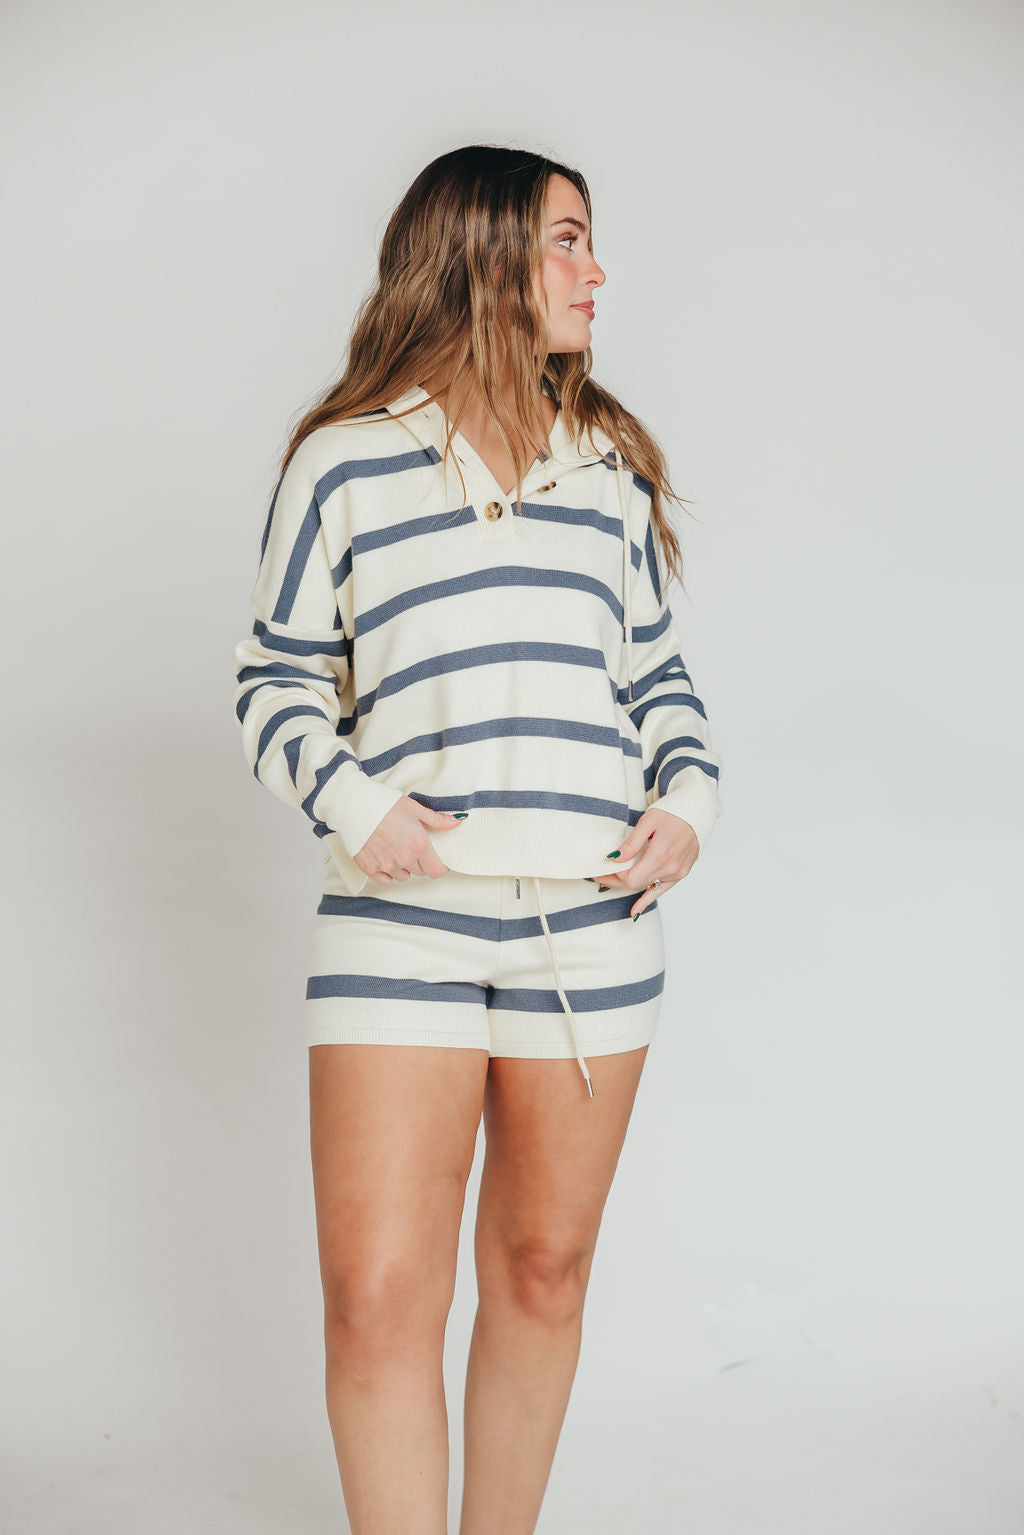 Brighton Pullover Top in White and Slate Blue Stripe